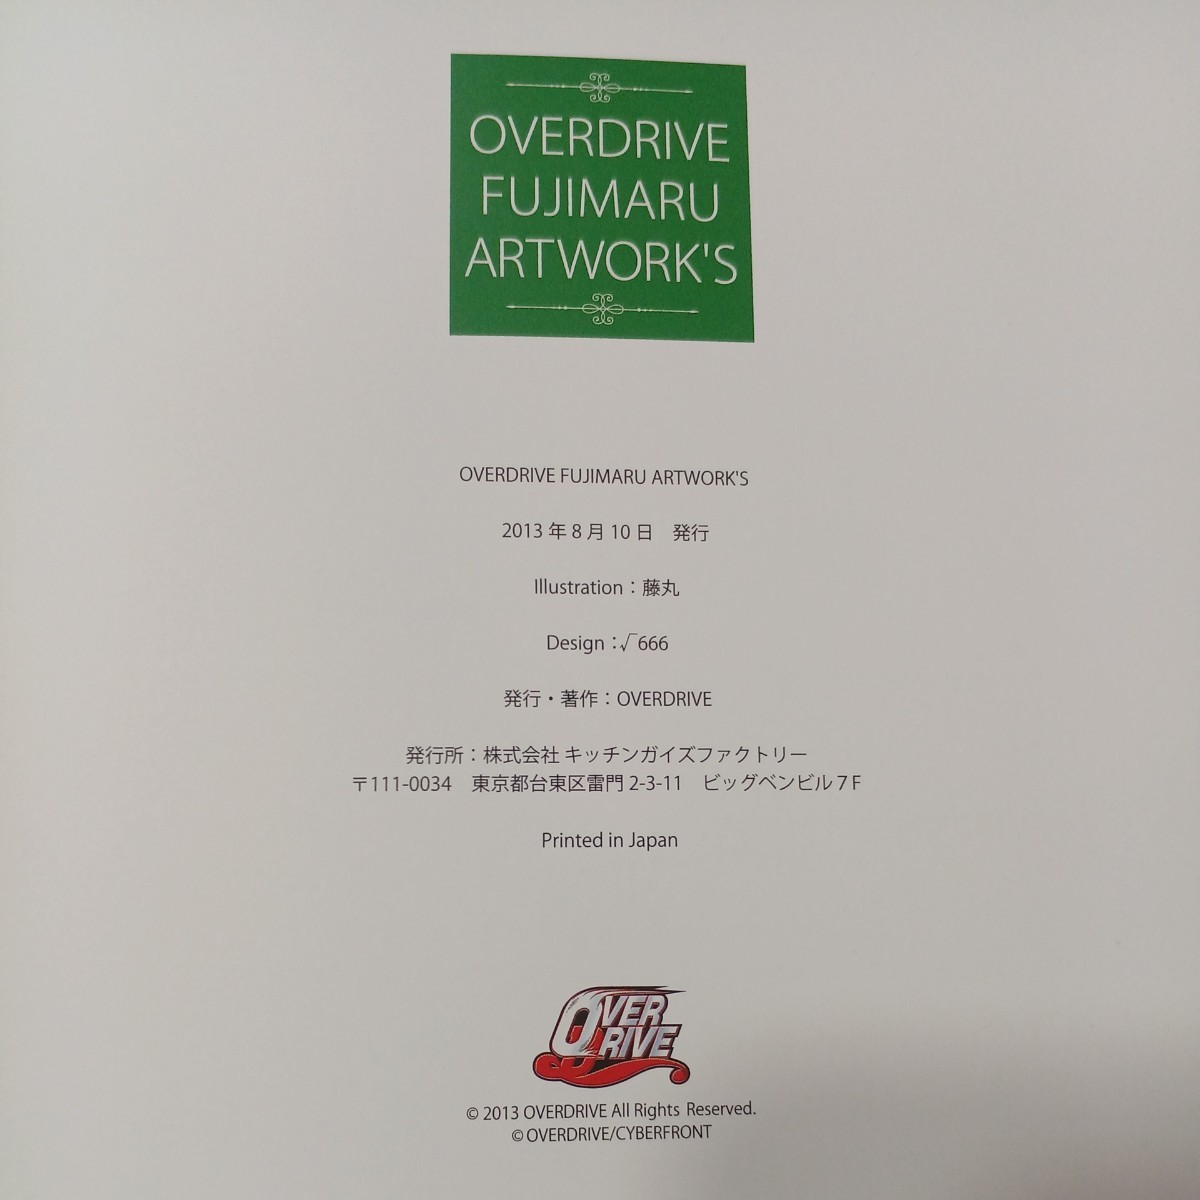 zaa-486♪OVERDRIVE (藤丸) OVERDRIVE FUJIMARU ARTWORKS 僕が天使になった理由 2013/8/10